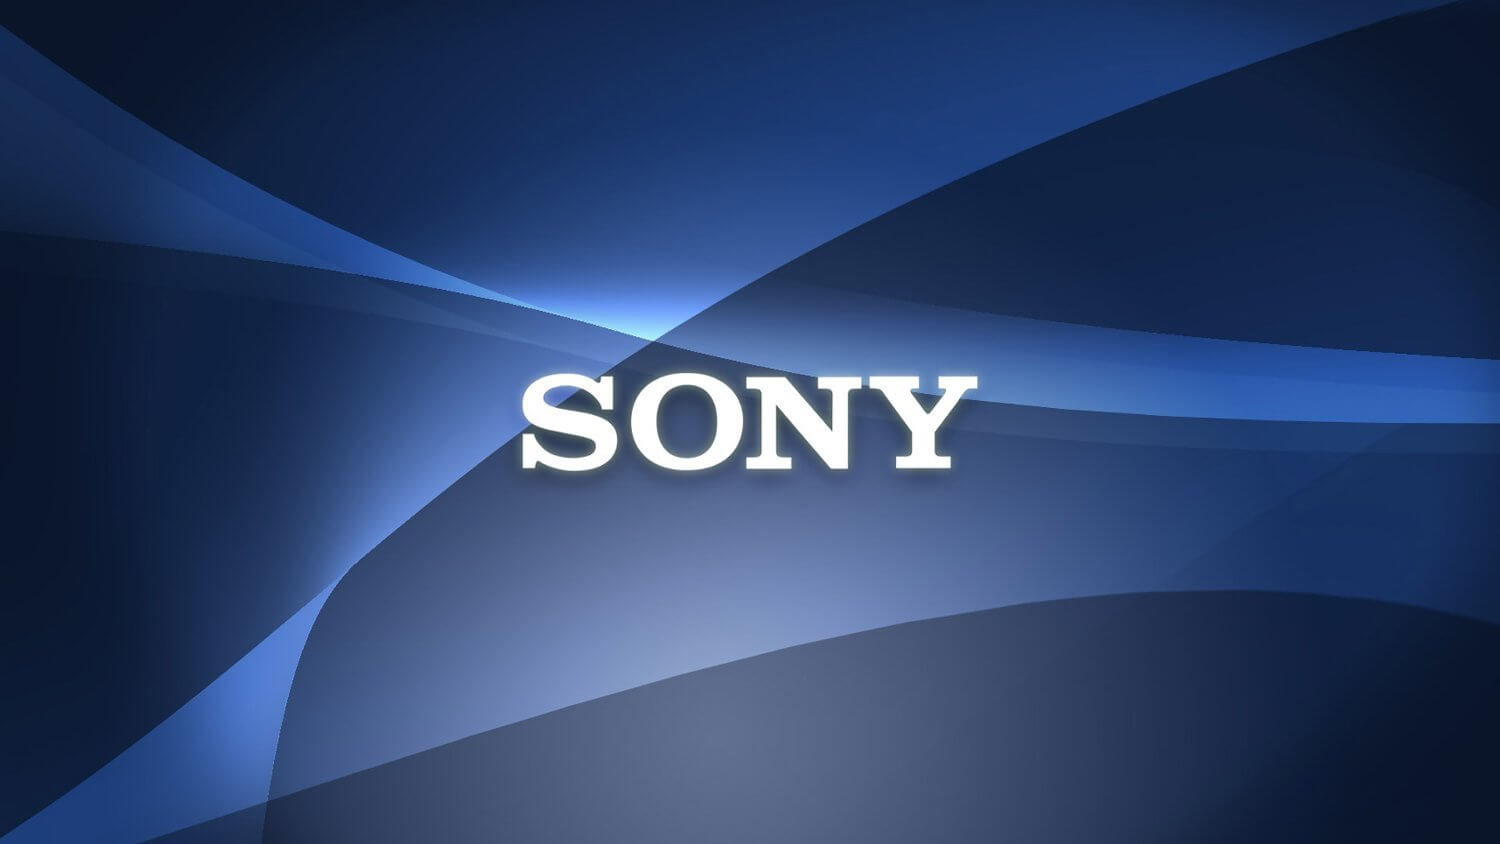 Окажется ли таким, как на новых фото, флагманский Sony Xperia F8331? Фото.